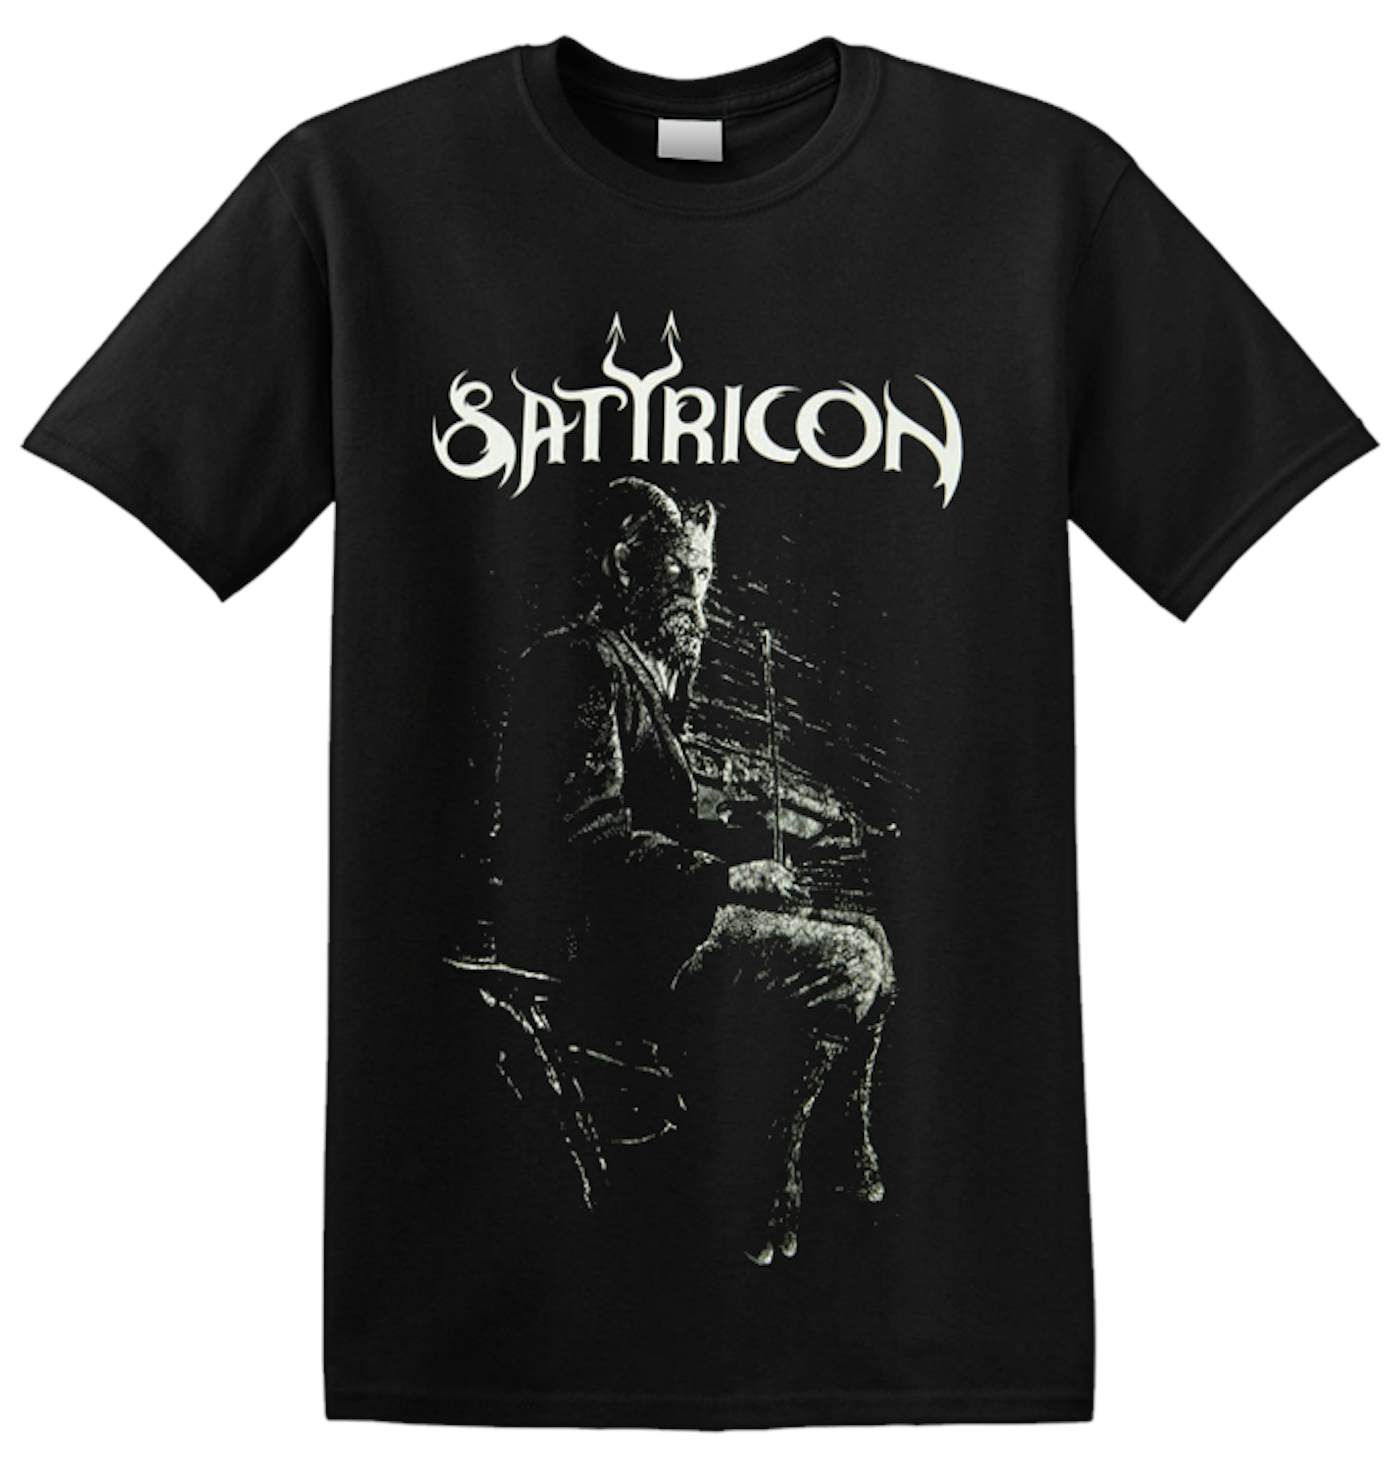 Urter Army kan ikke se Satyricon 'Fanden' T-Shirt